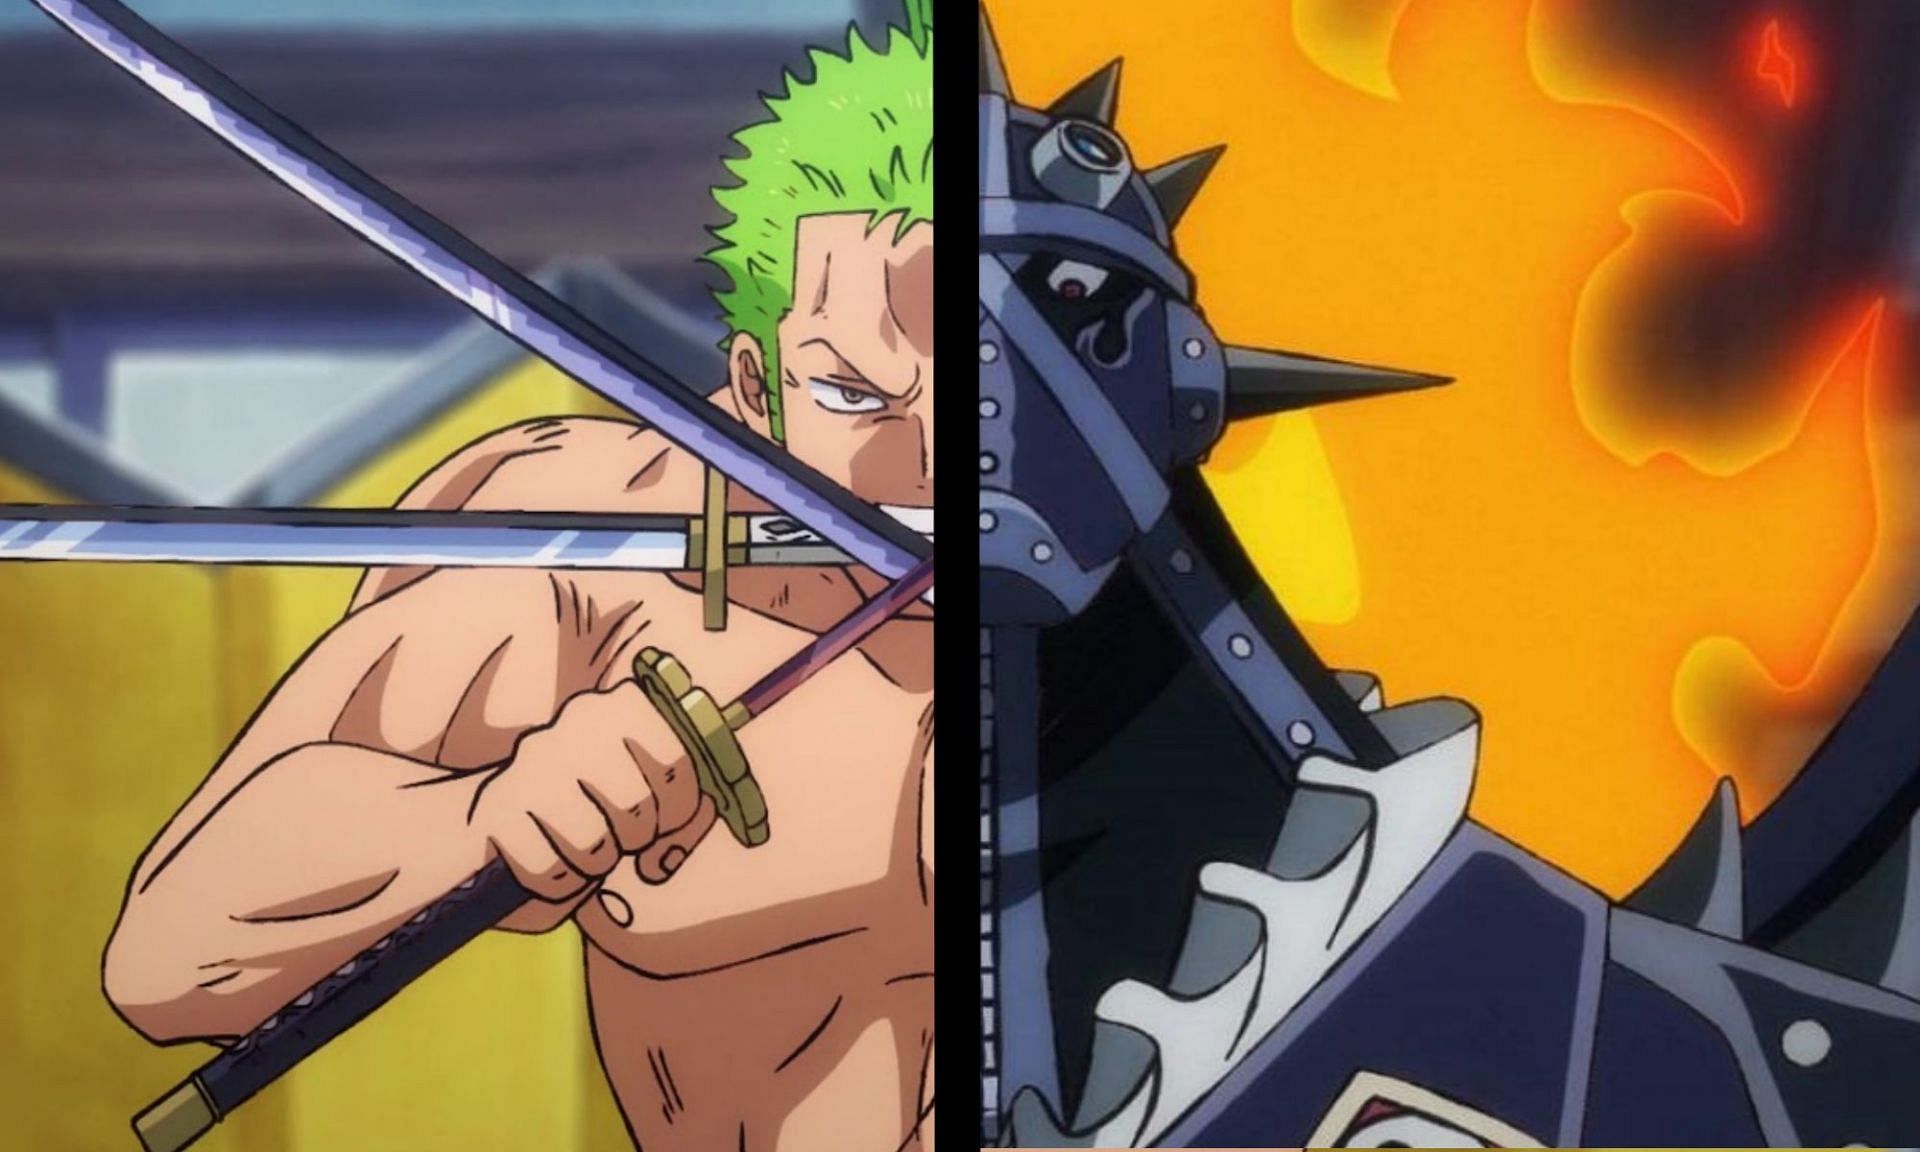 One Piece Chapter 1033 was a major development in Zoro versus King (Image via Sportskeeda)